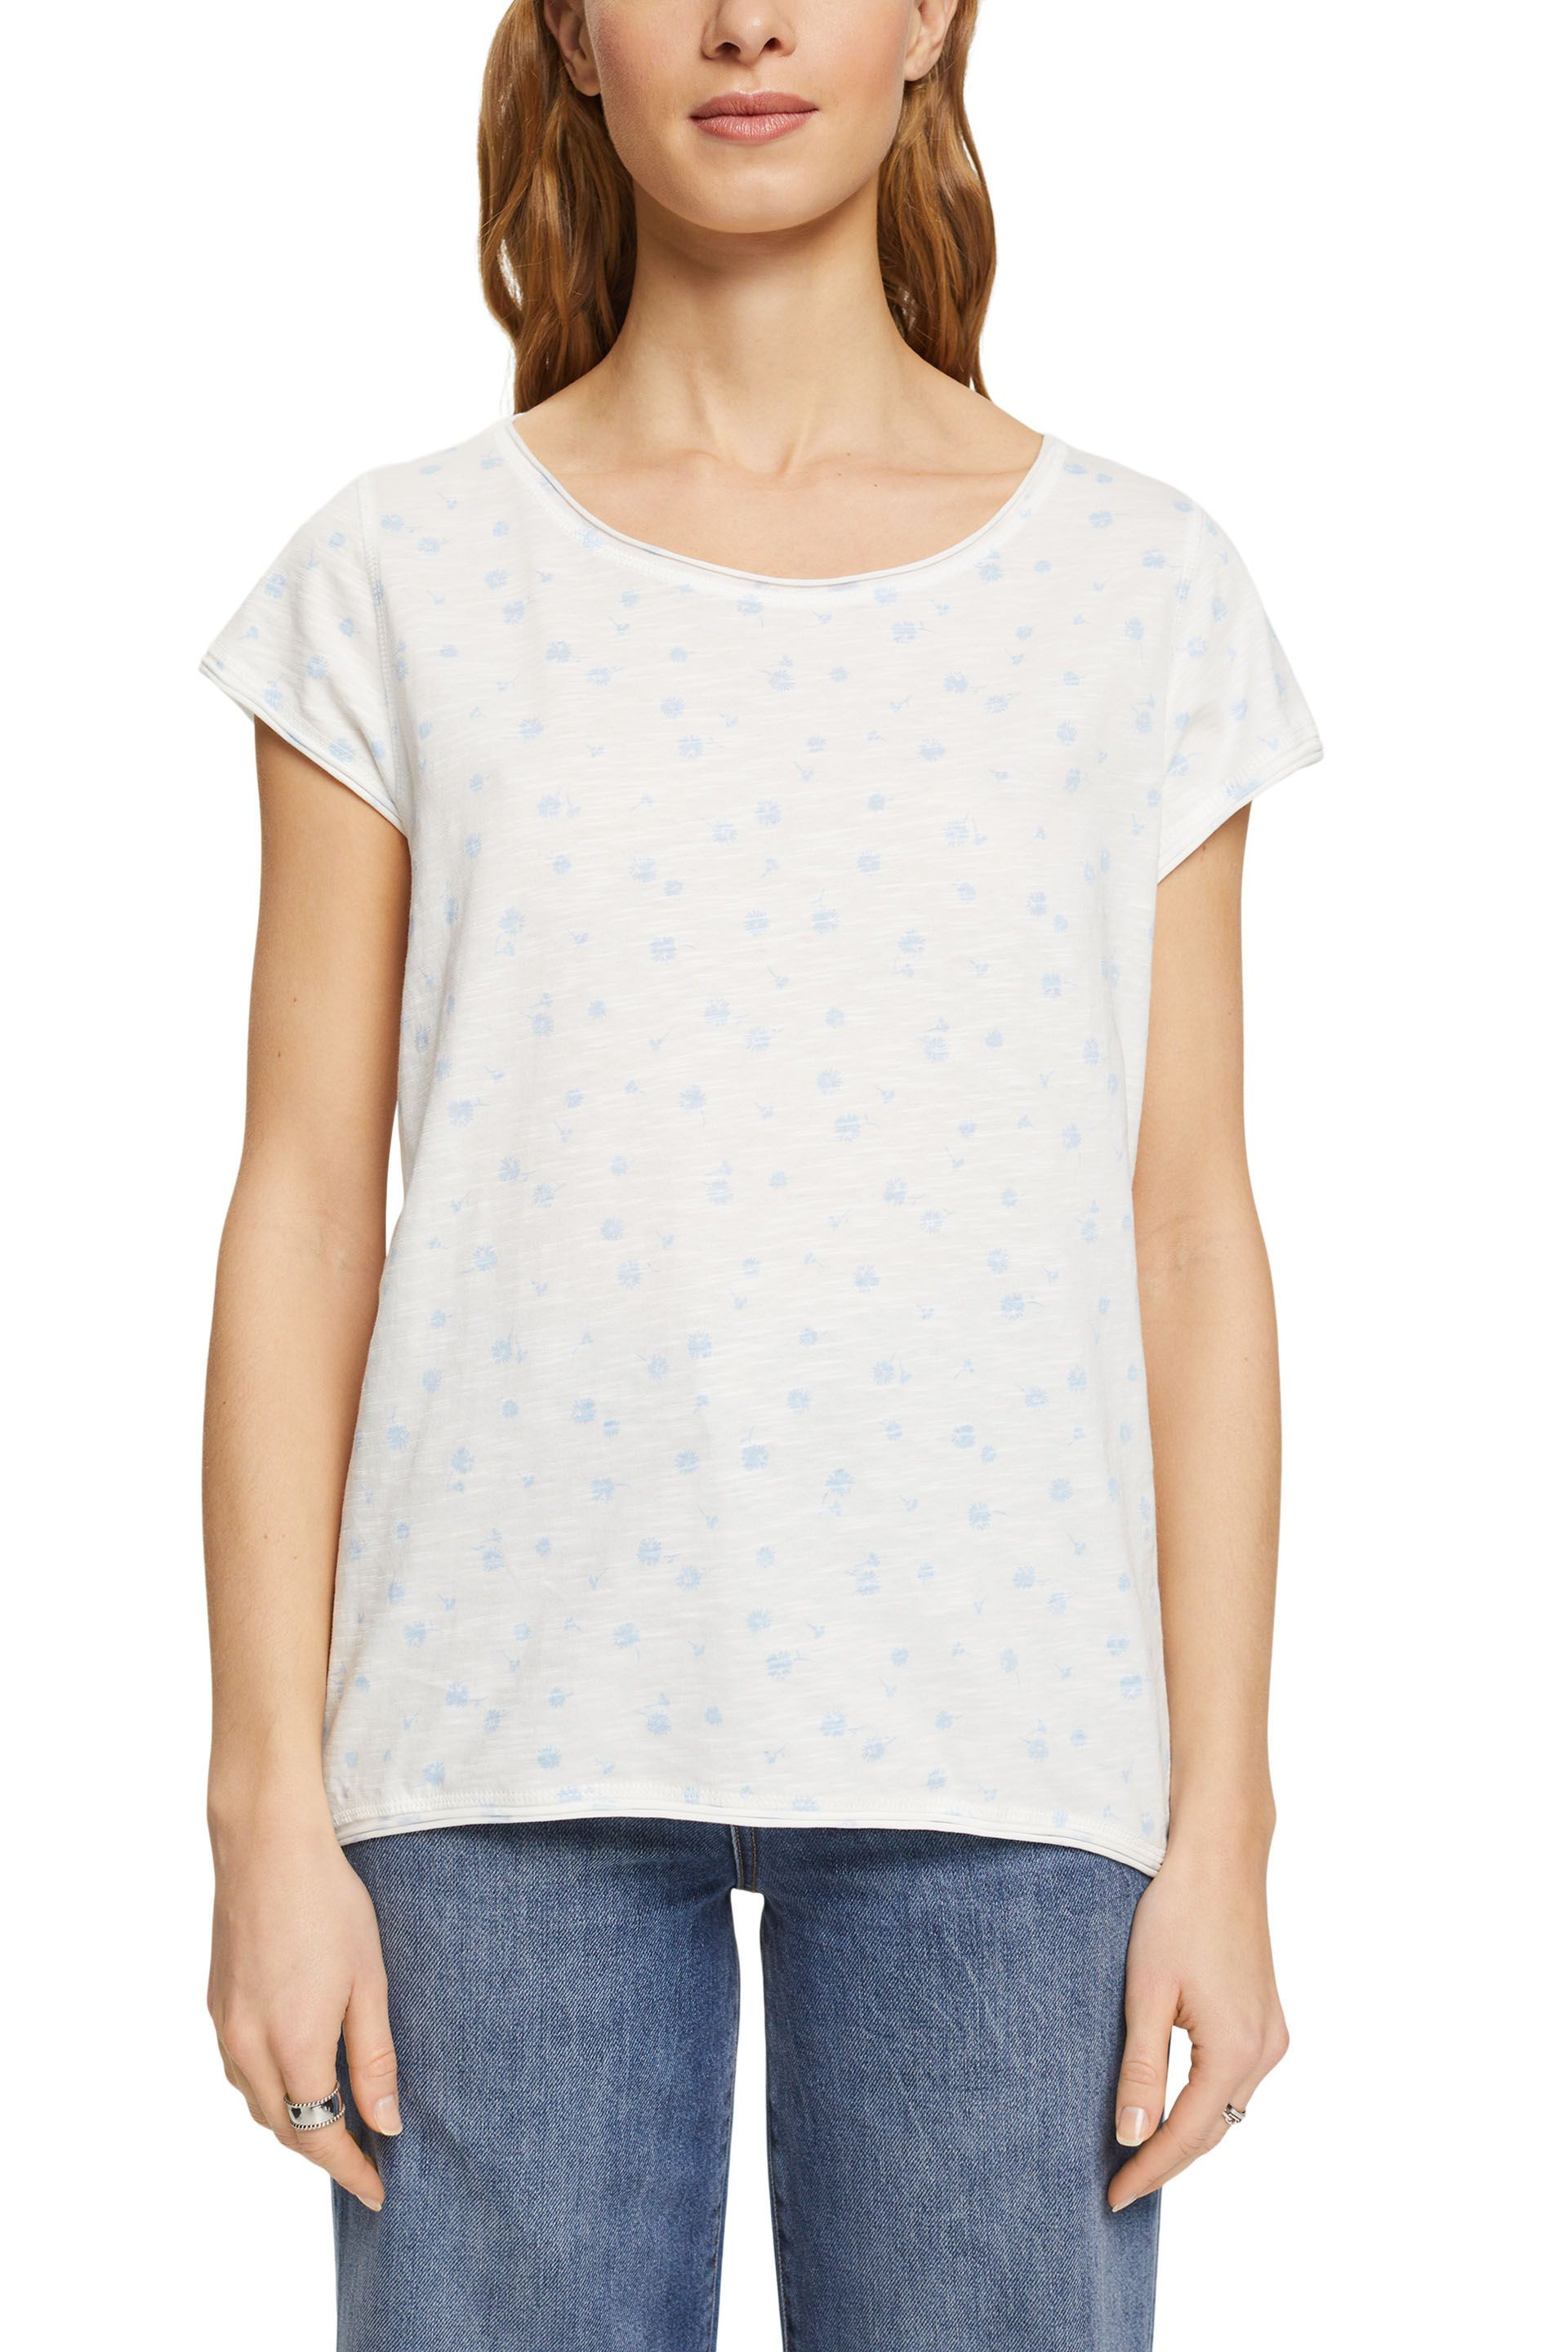 Esprit - T-shirt con stampa, Bianco, large image number 1